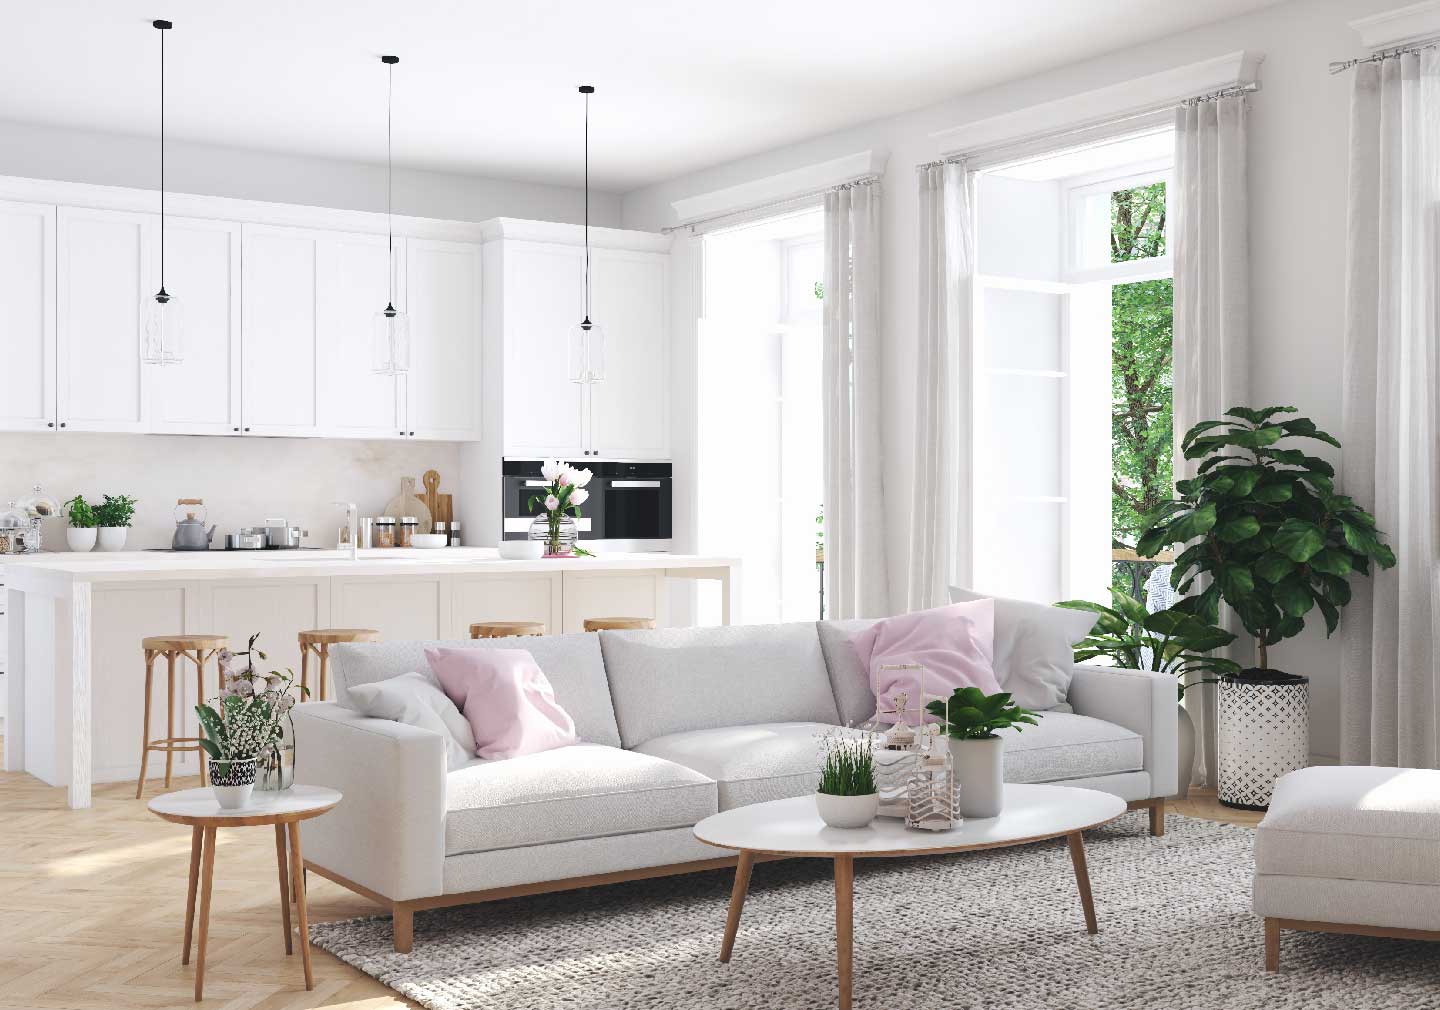 2BHK home interior design idea for white theme living room